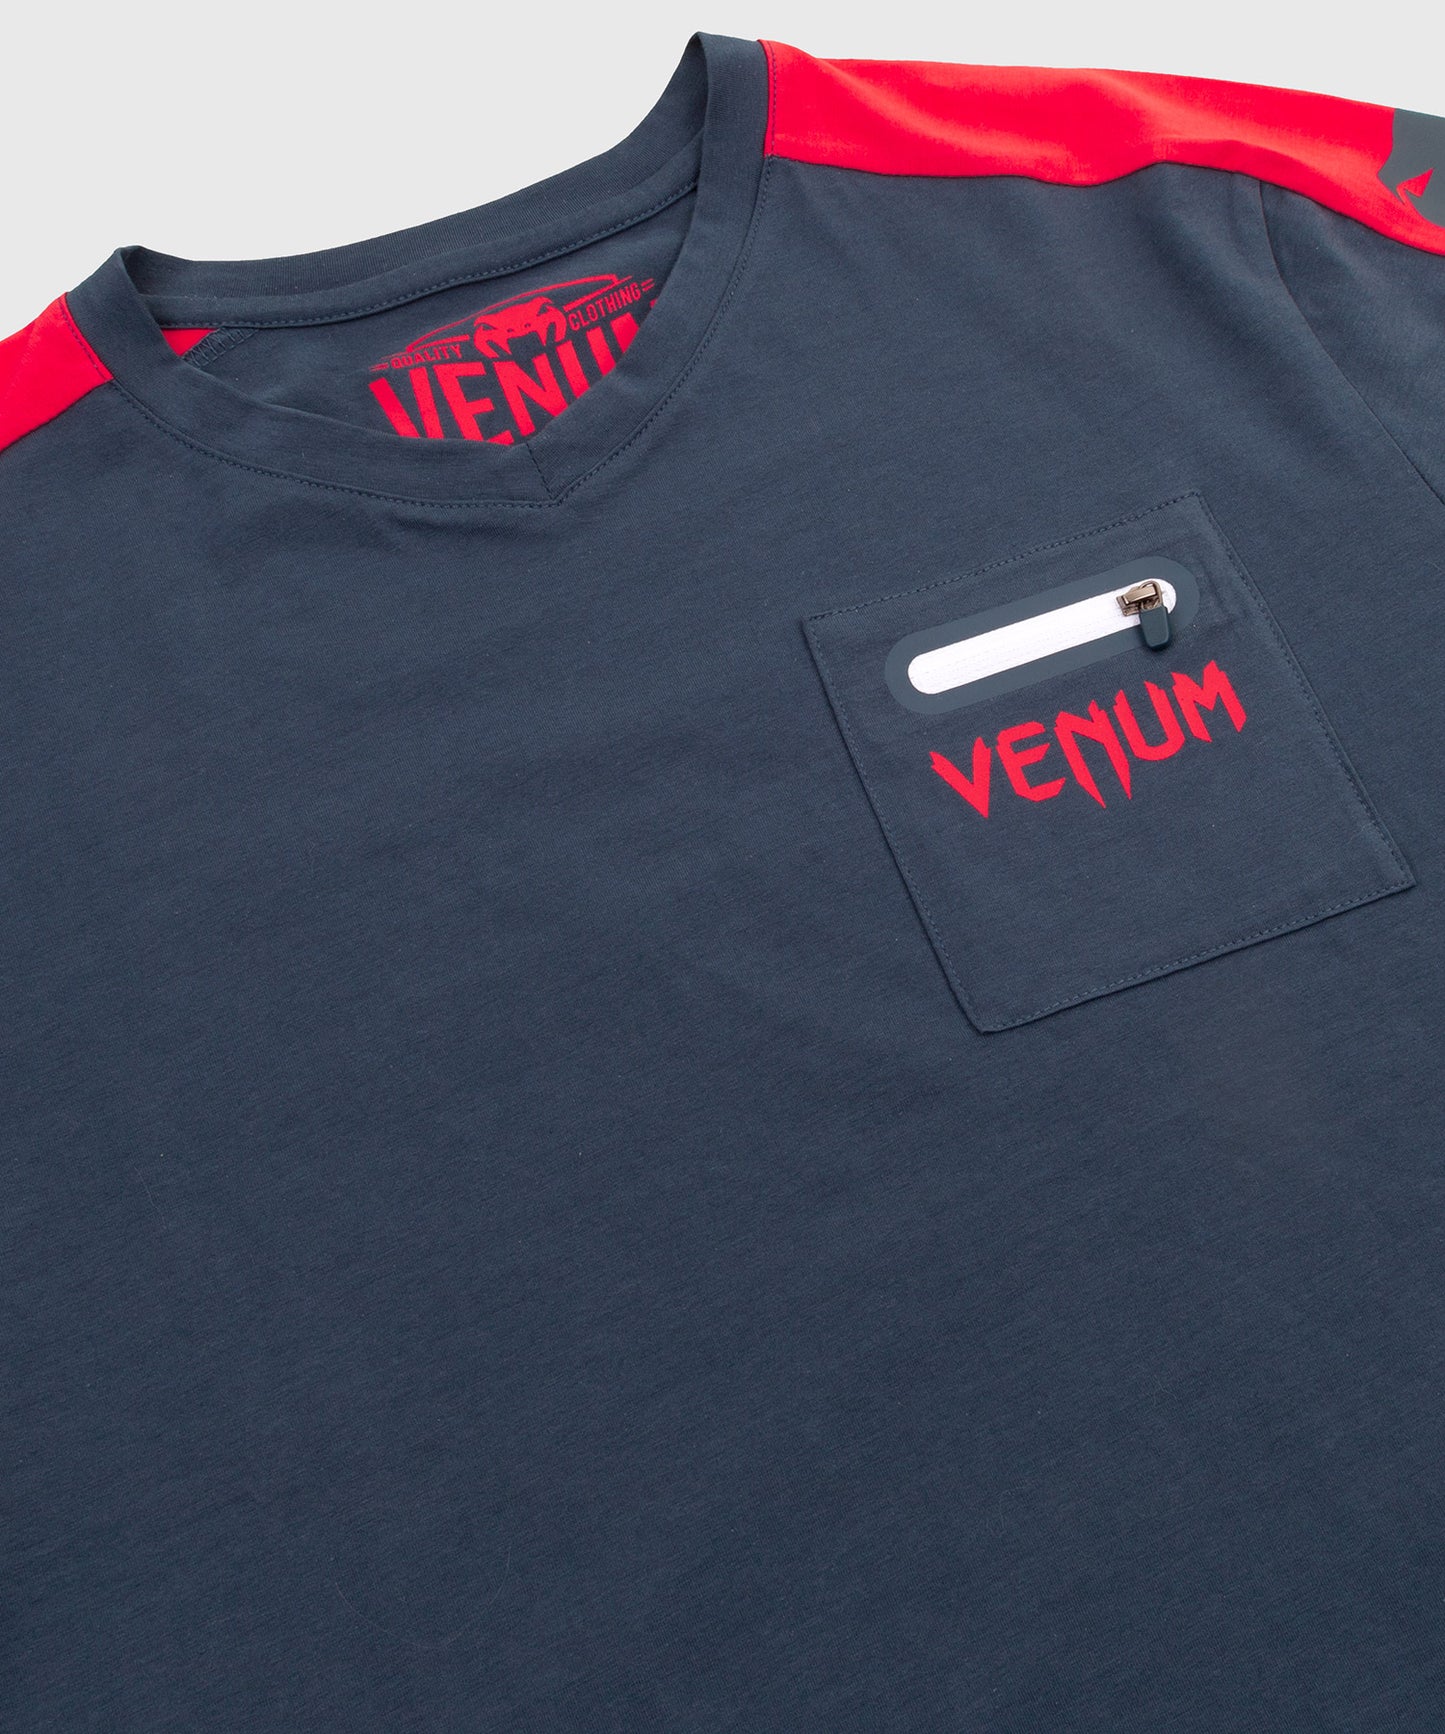 Venum Cargo T-shirt - donkerblauw_rozerood_wit